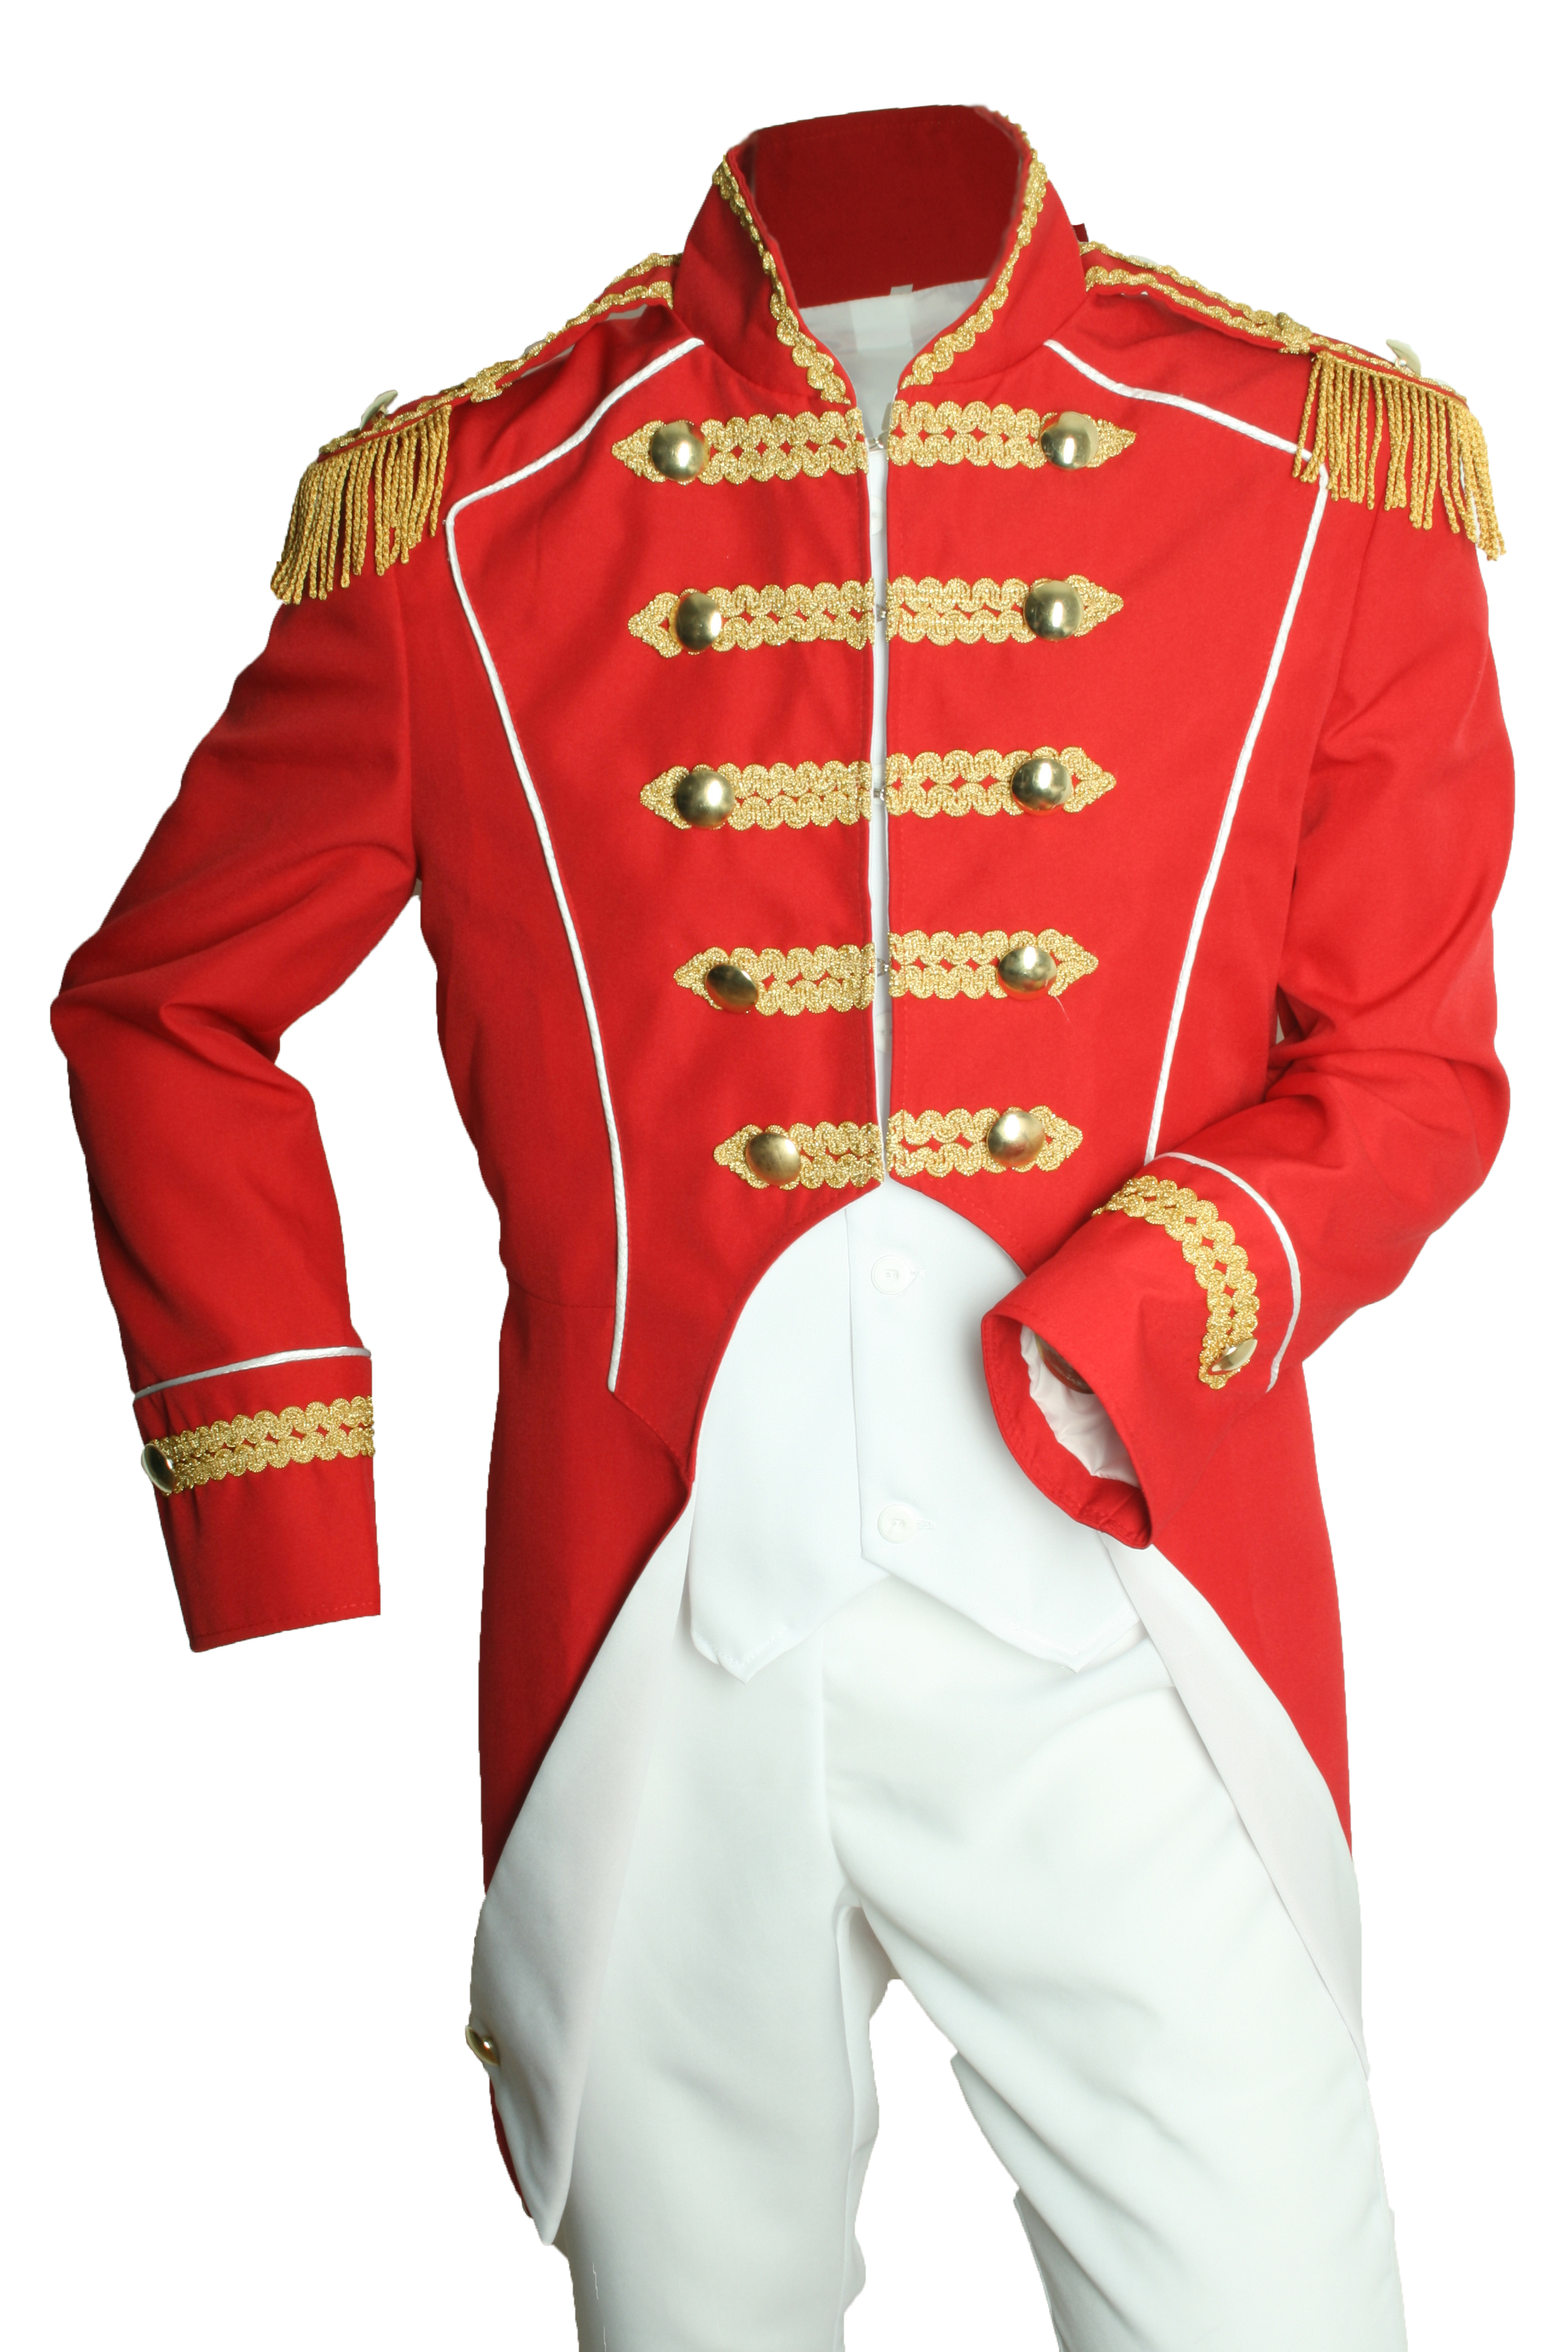 Soldat Napoleon Jacke Karnevalskostüm Uniform Fasching Theater Party Gehrock TOP